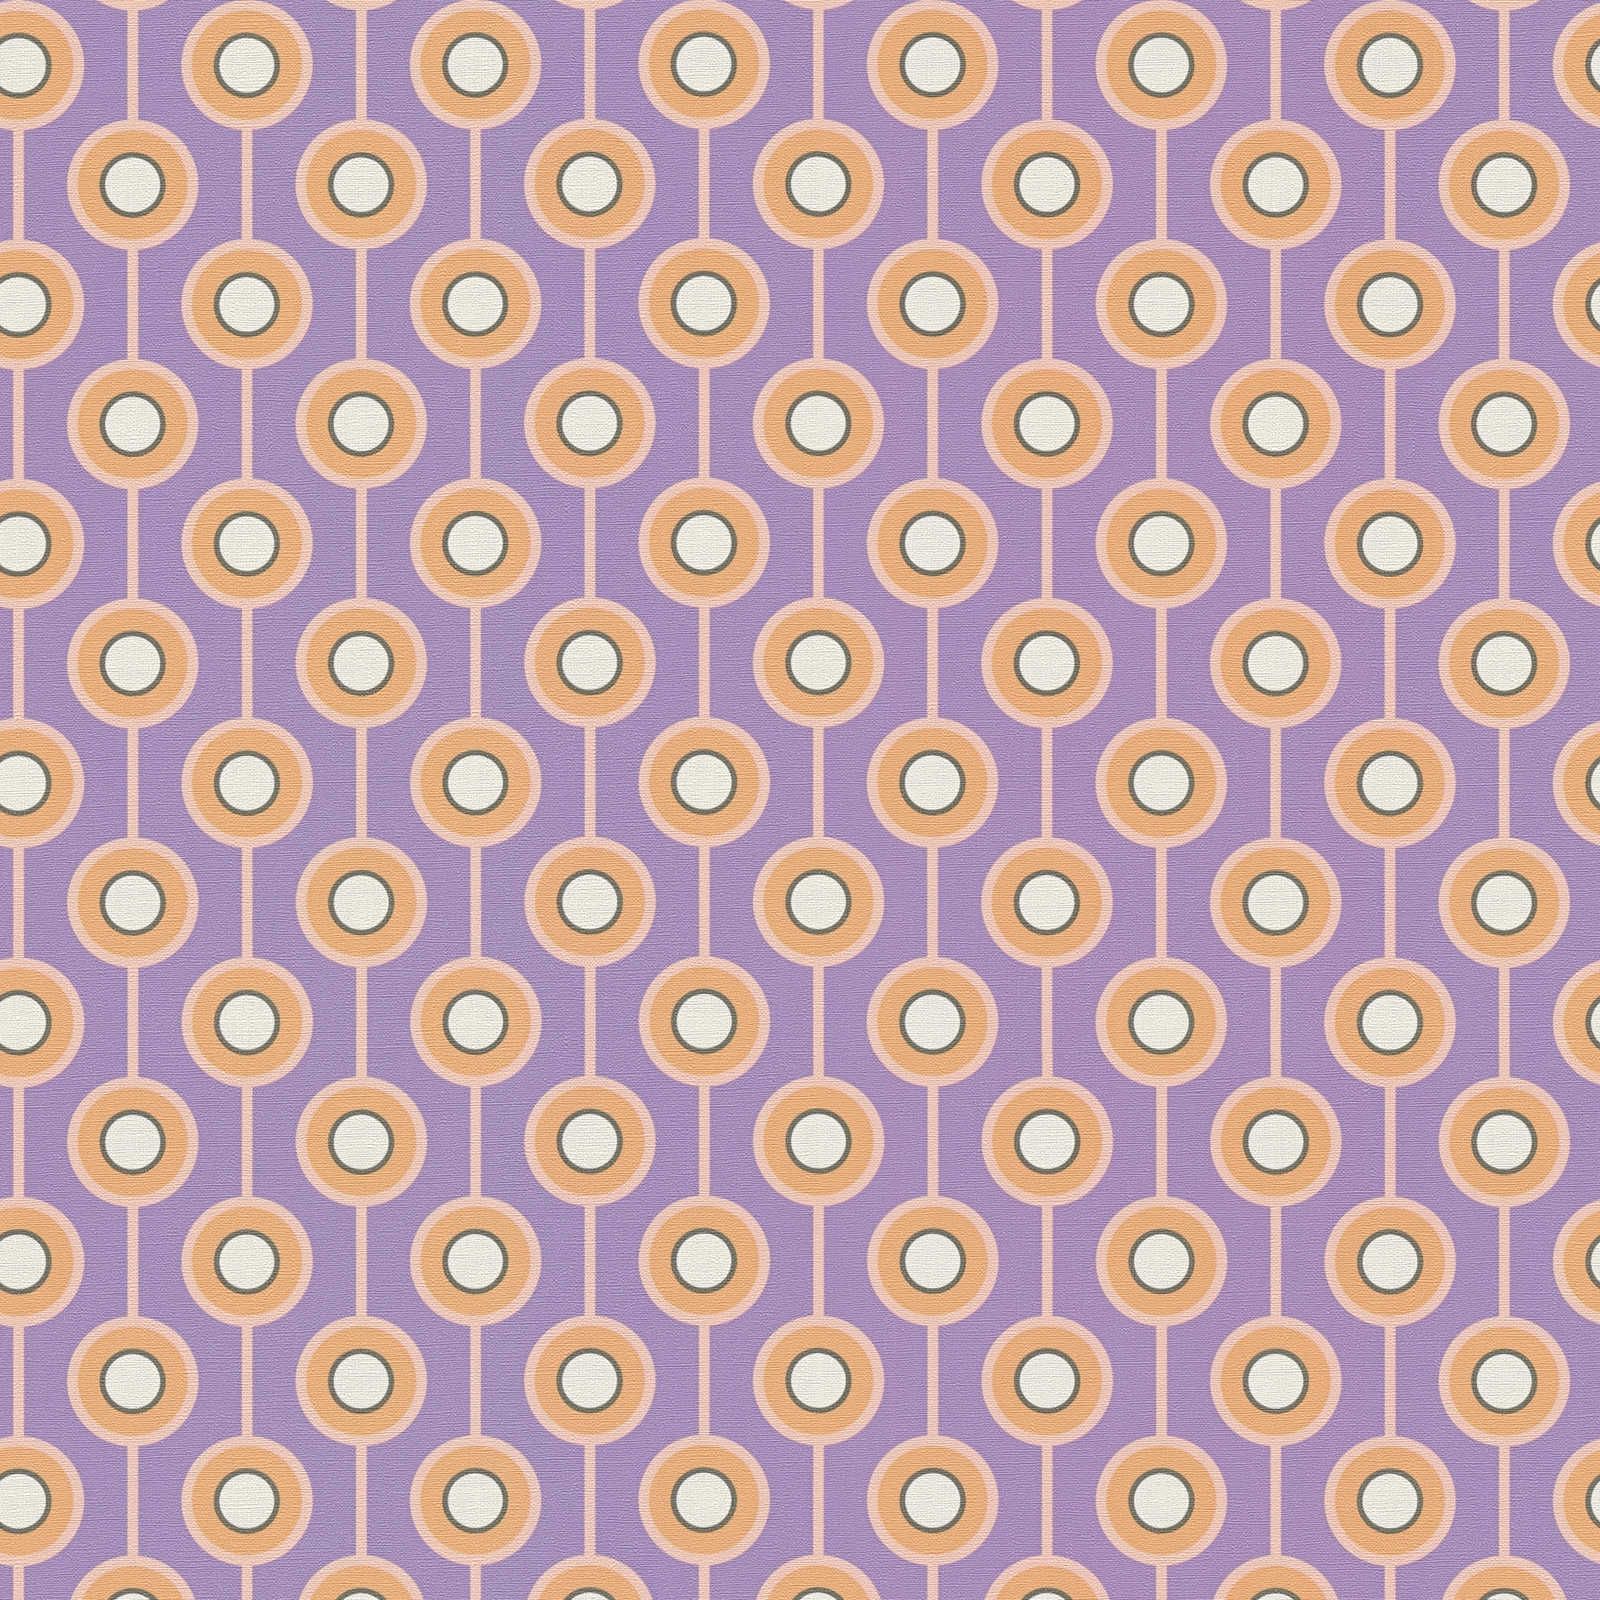 Abstract circle pattern on non-woven wallpaper in retro style - purple, orange, beige
